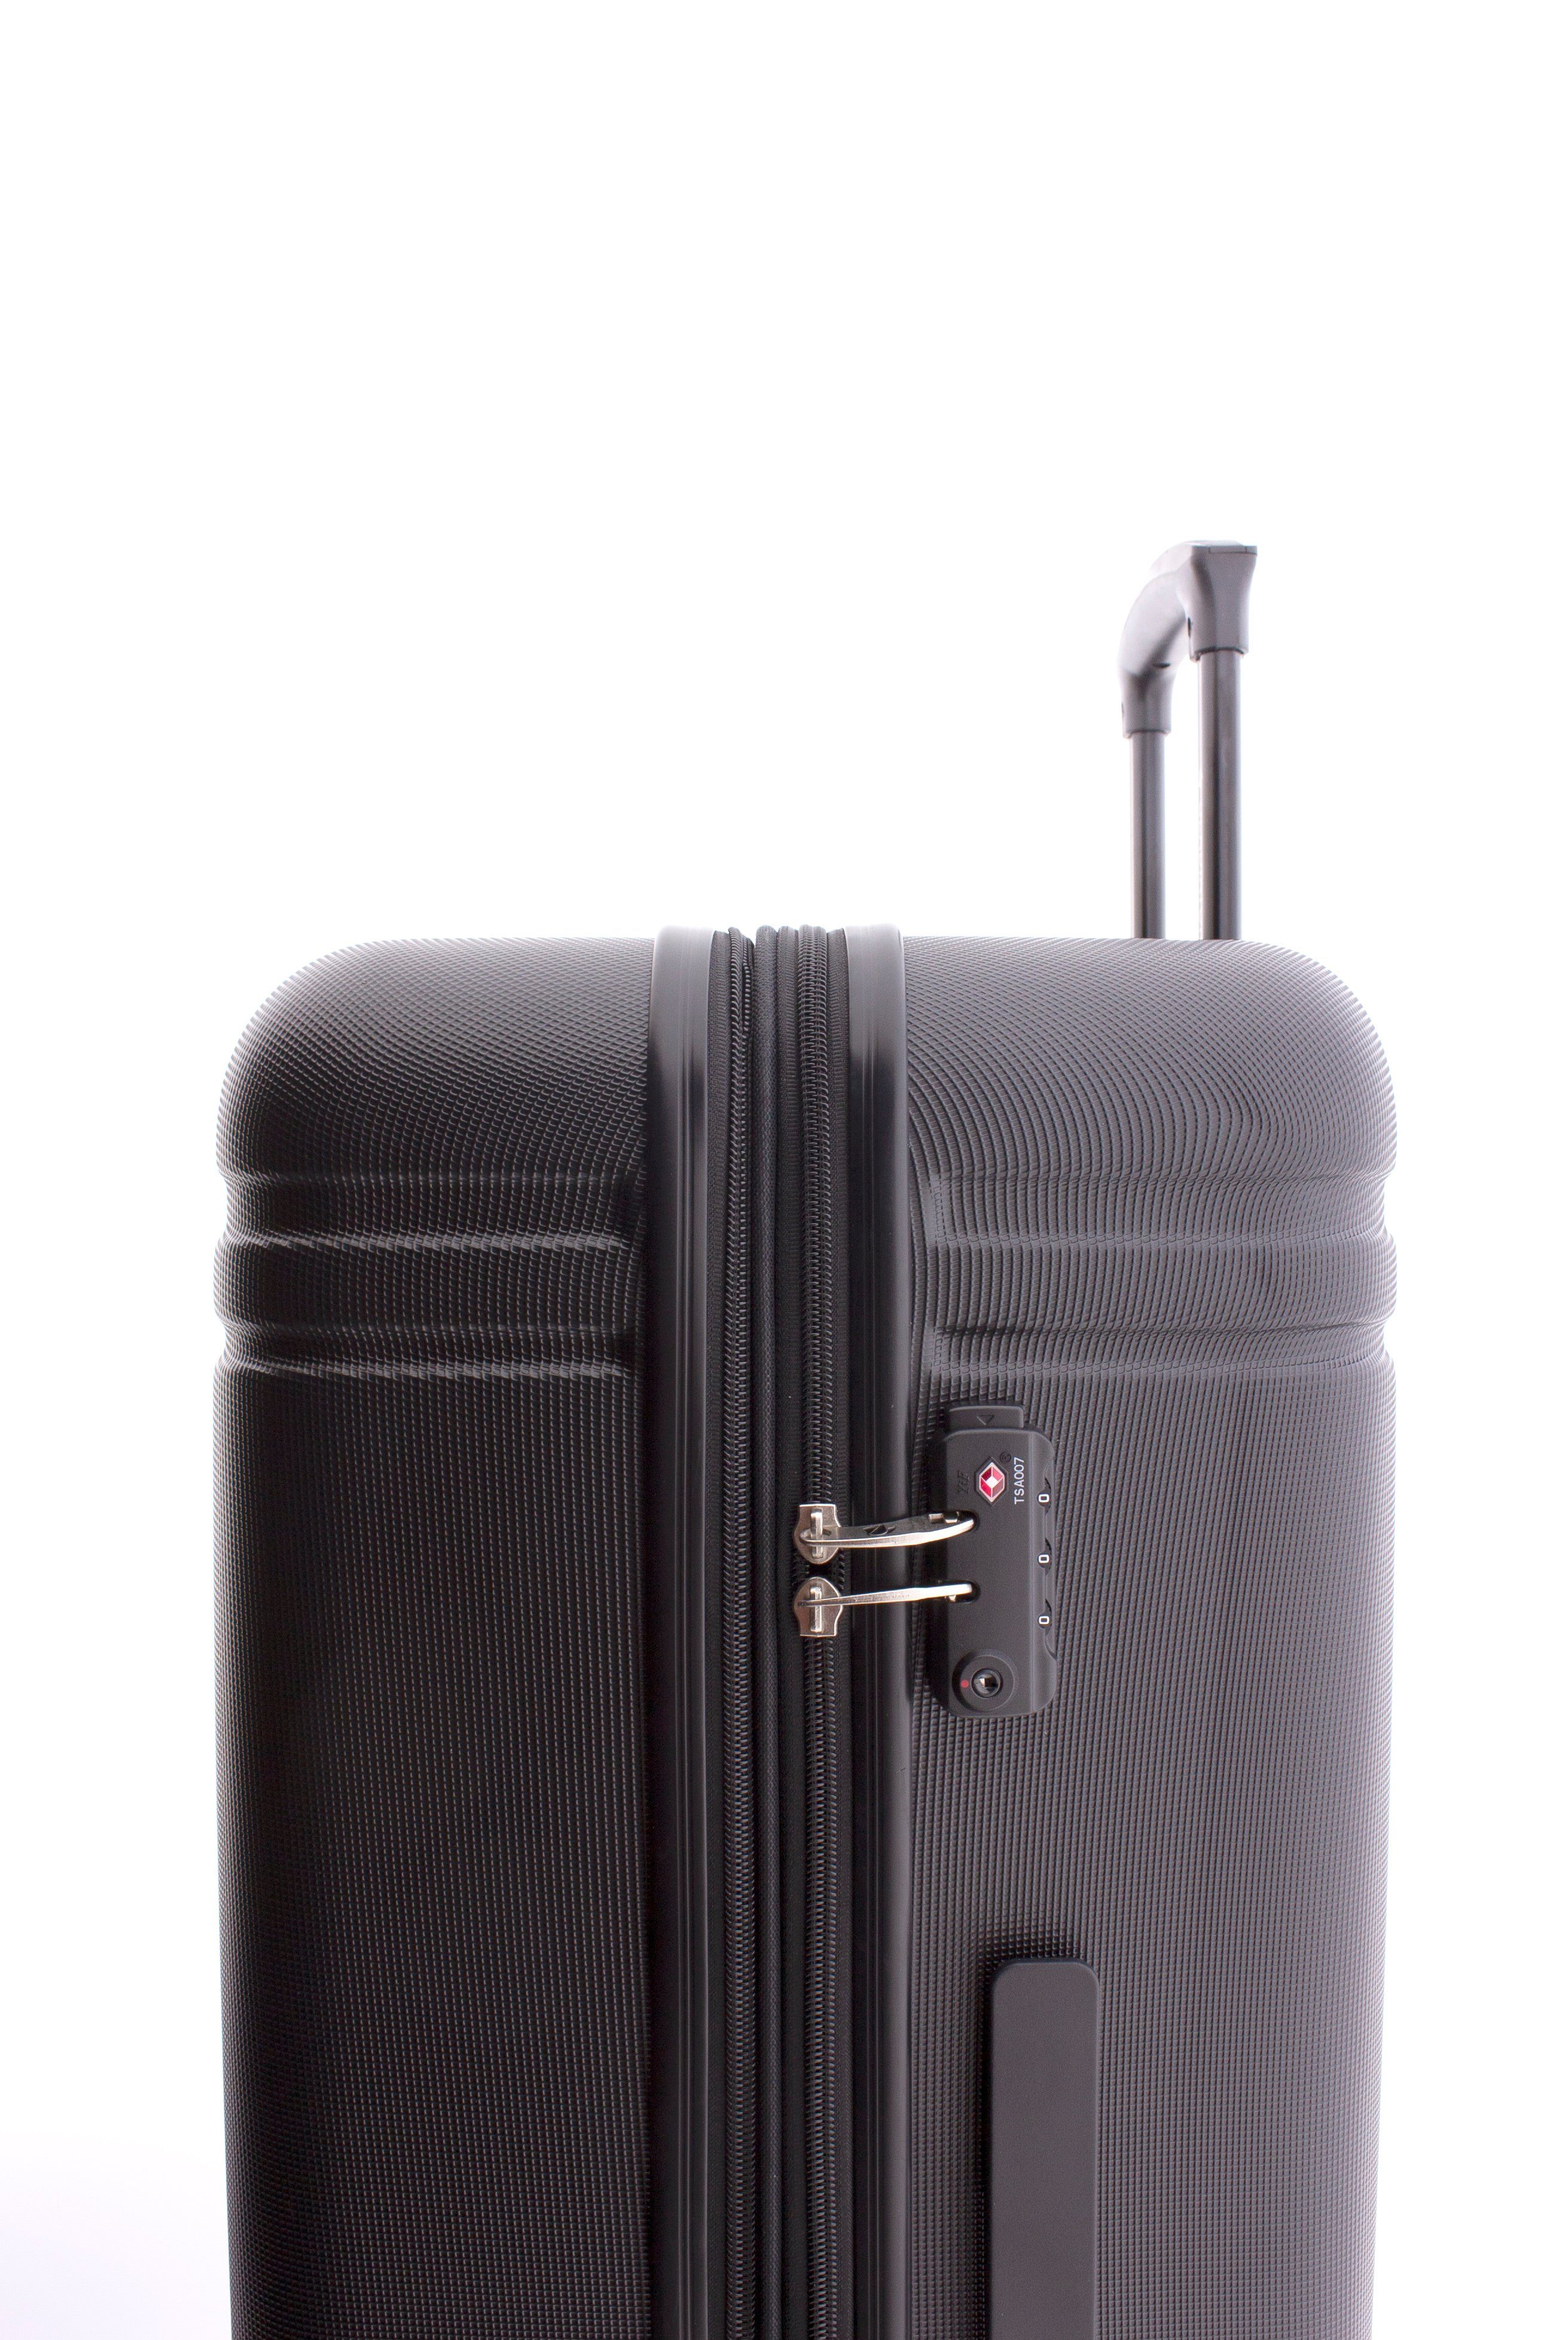 GLADIATOR Trolleyset - Koffer-Set div. schwarz Farben Dehnfalte, Rollen, cm, 67+55 2-tlg. 4 TSA